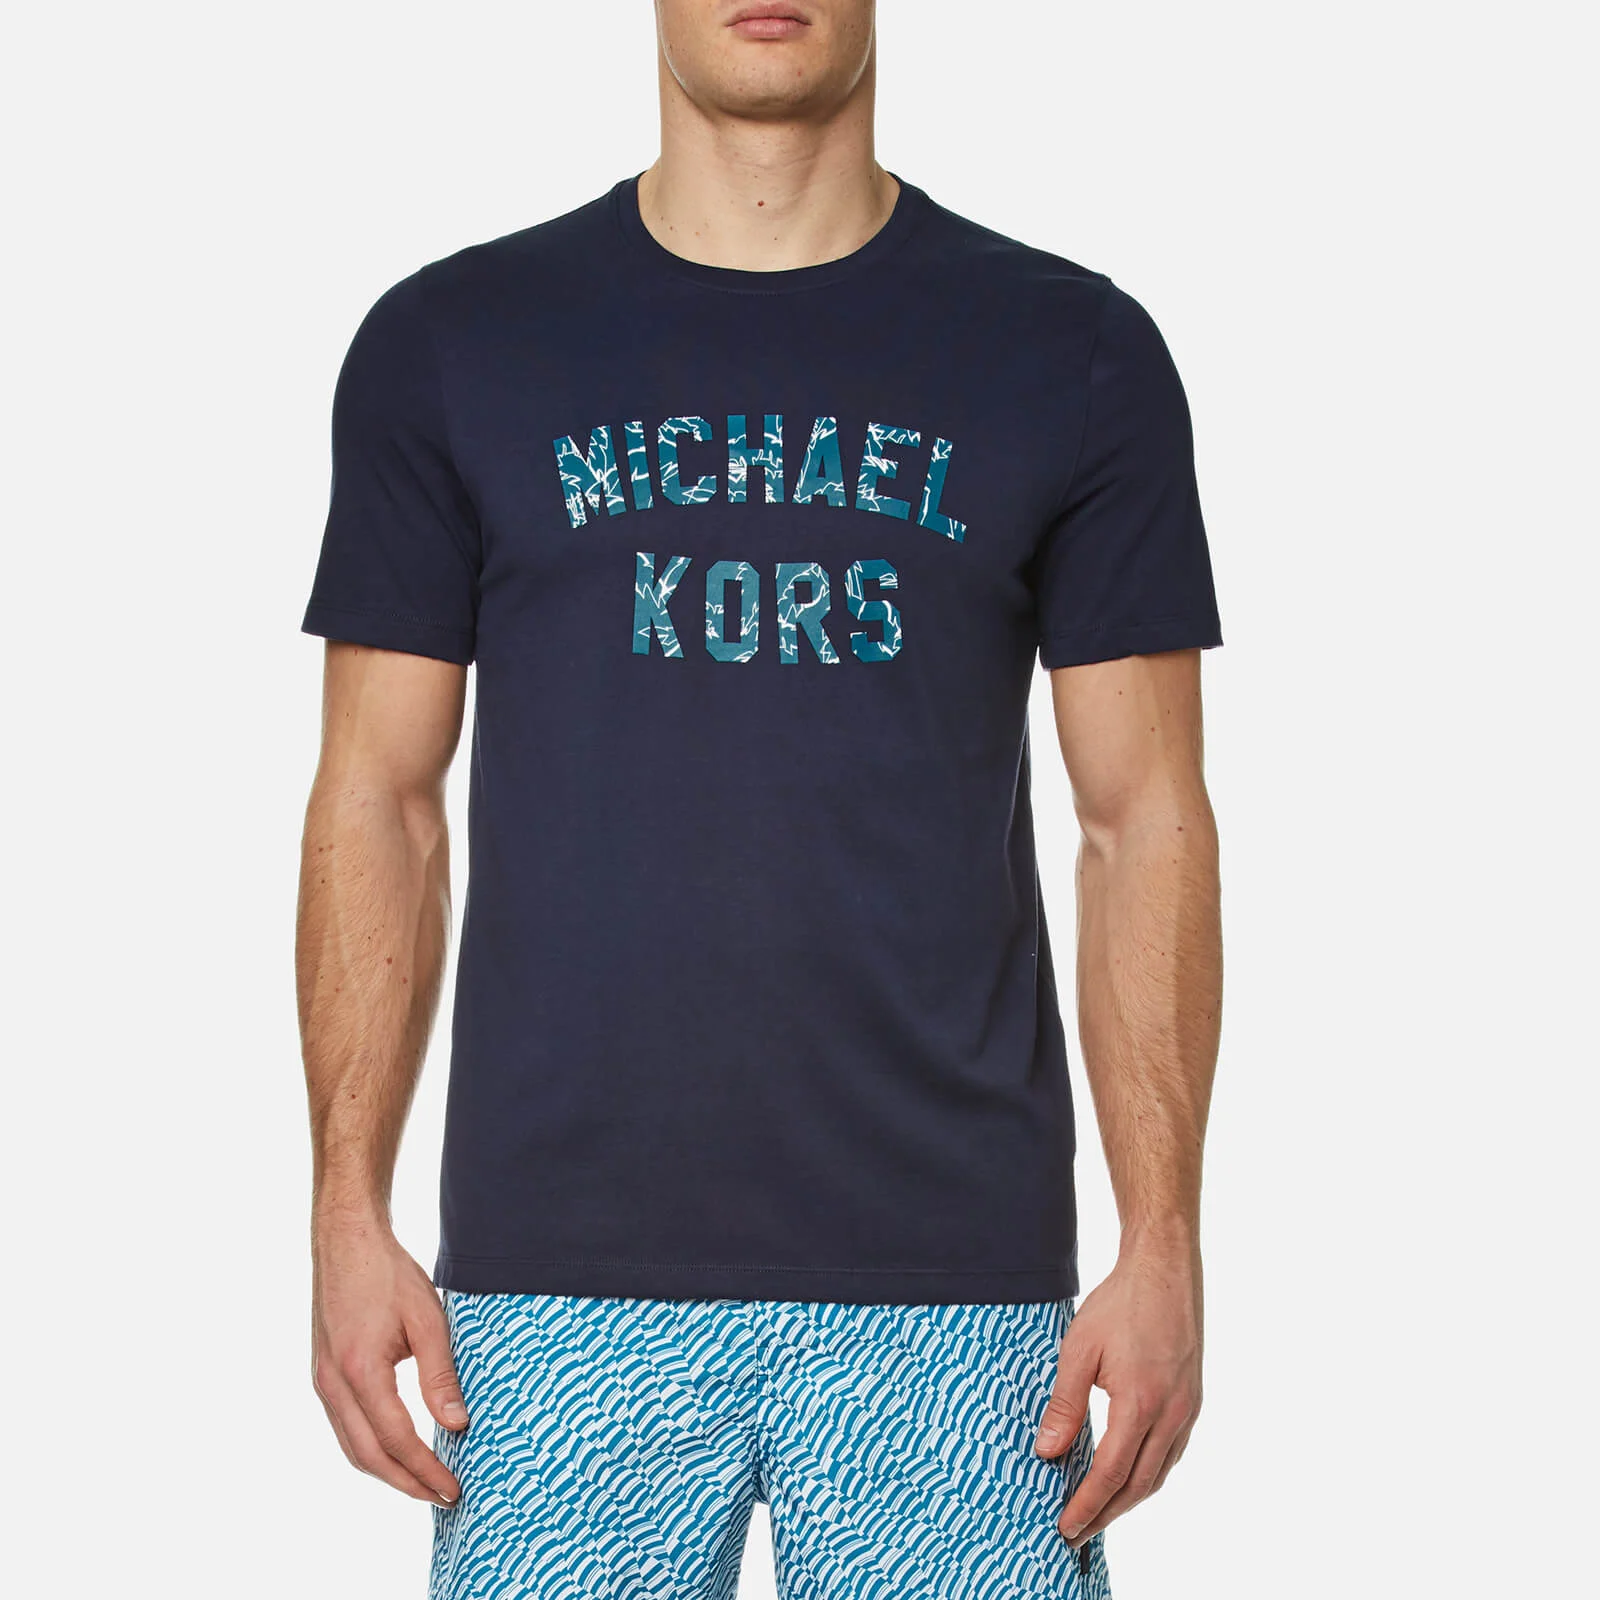 Michael Kors Men's Graphic Michael Kors Logo T-Shirt - Midnight Image 1